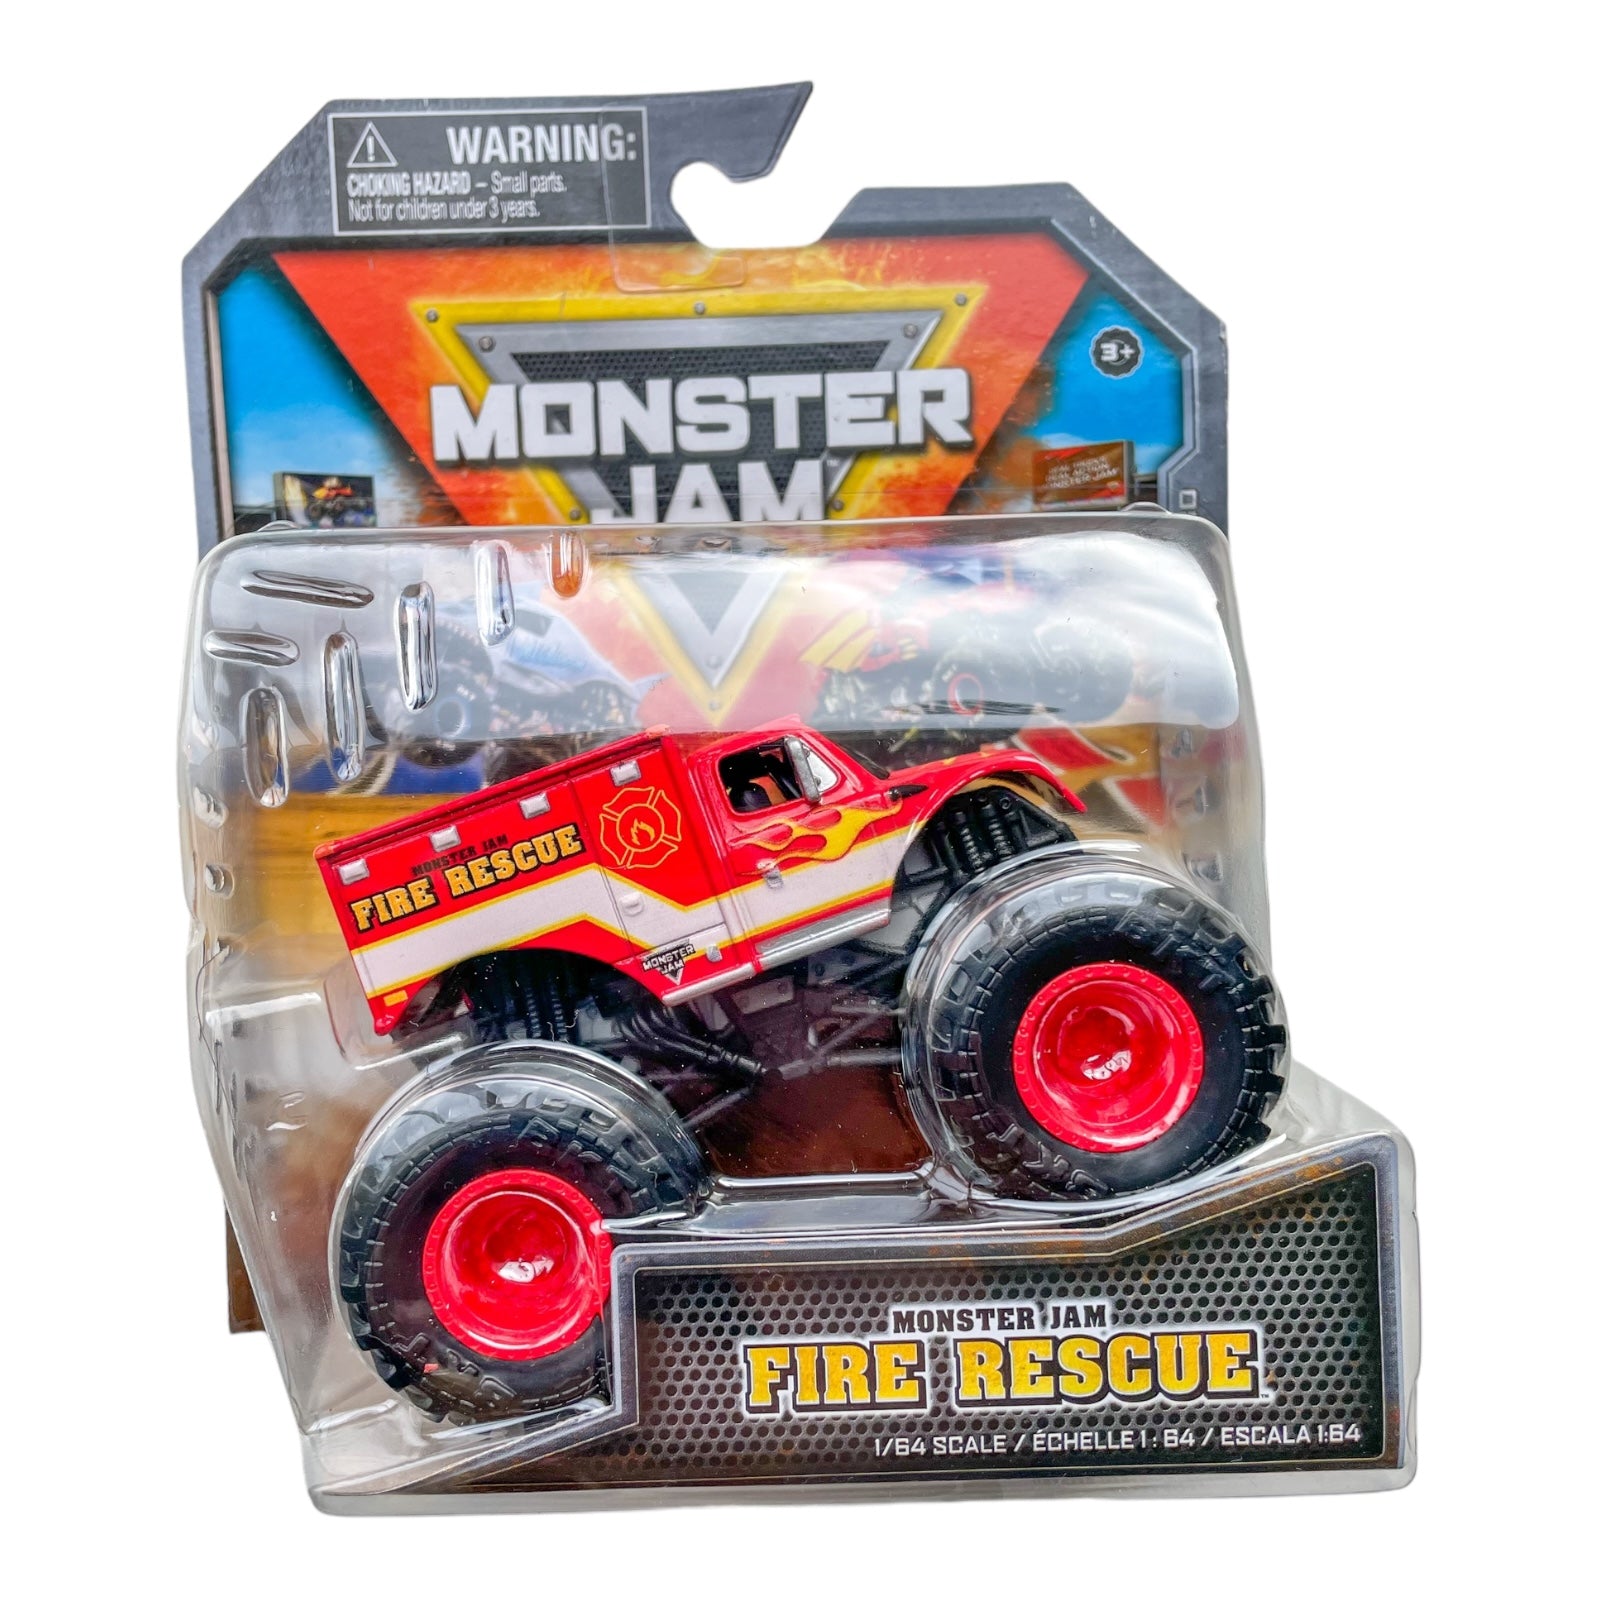 Monster Jam Die-Cast Vehicle 1:64 Scale Fire Rescue Monster Jam